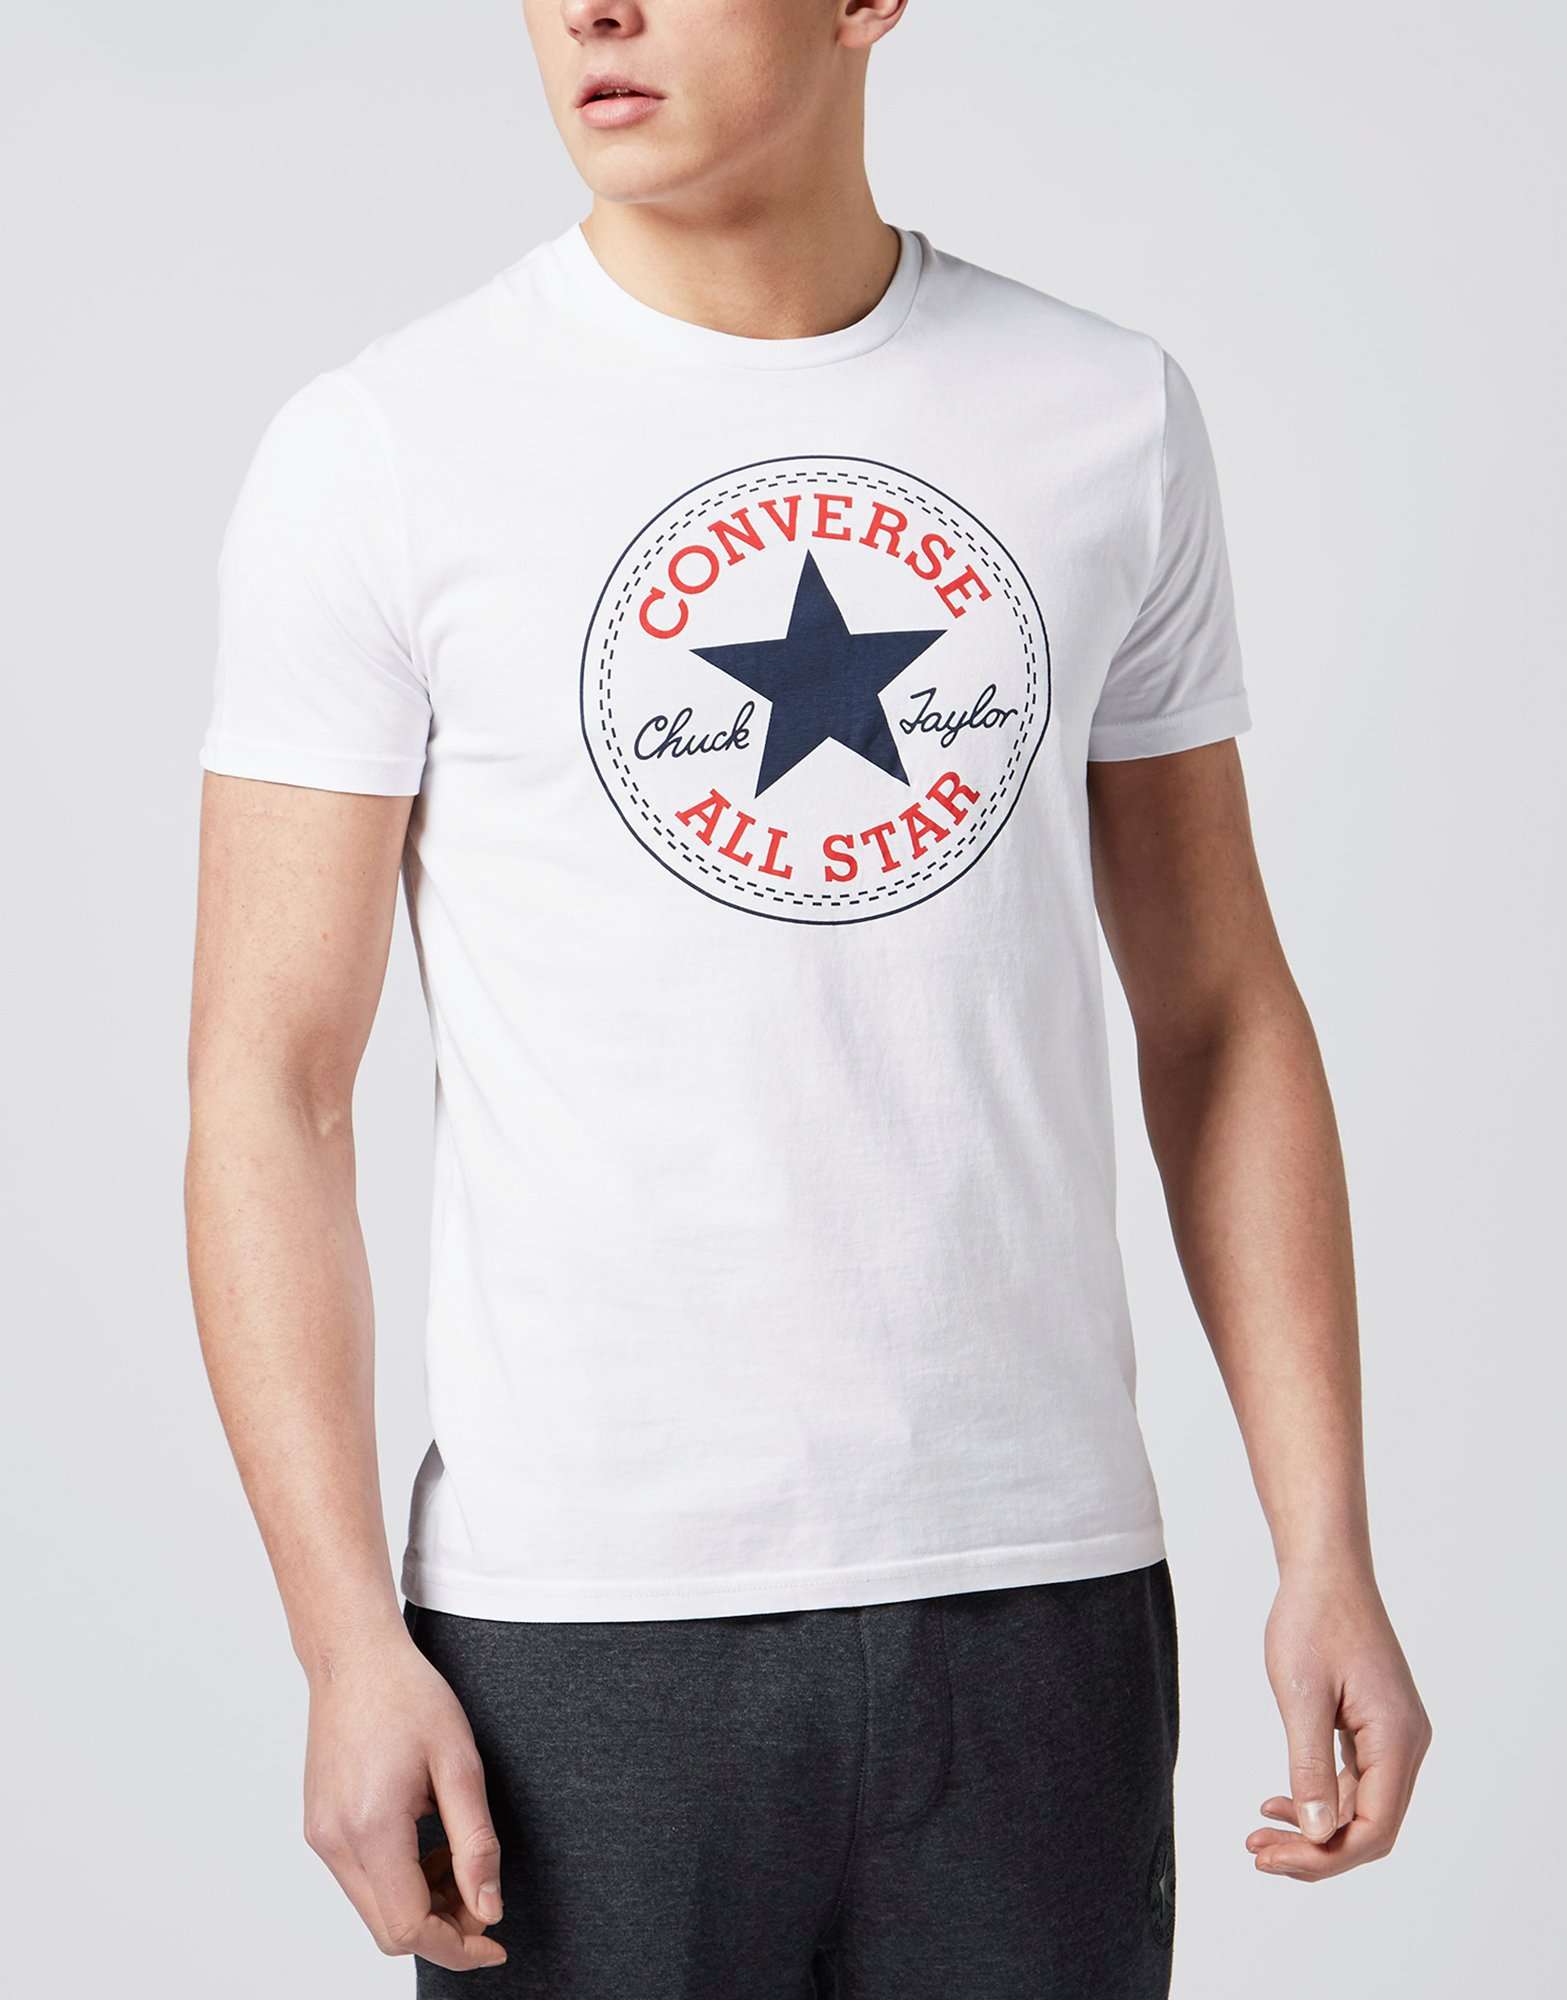 Converse Chuck Taylor Patch T-Shirt | scotts Menswear